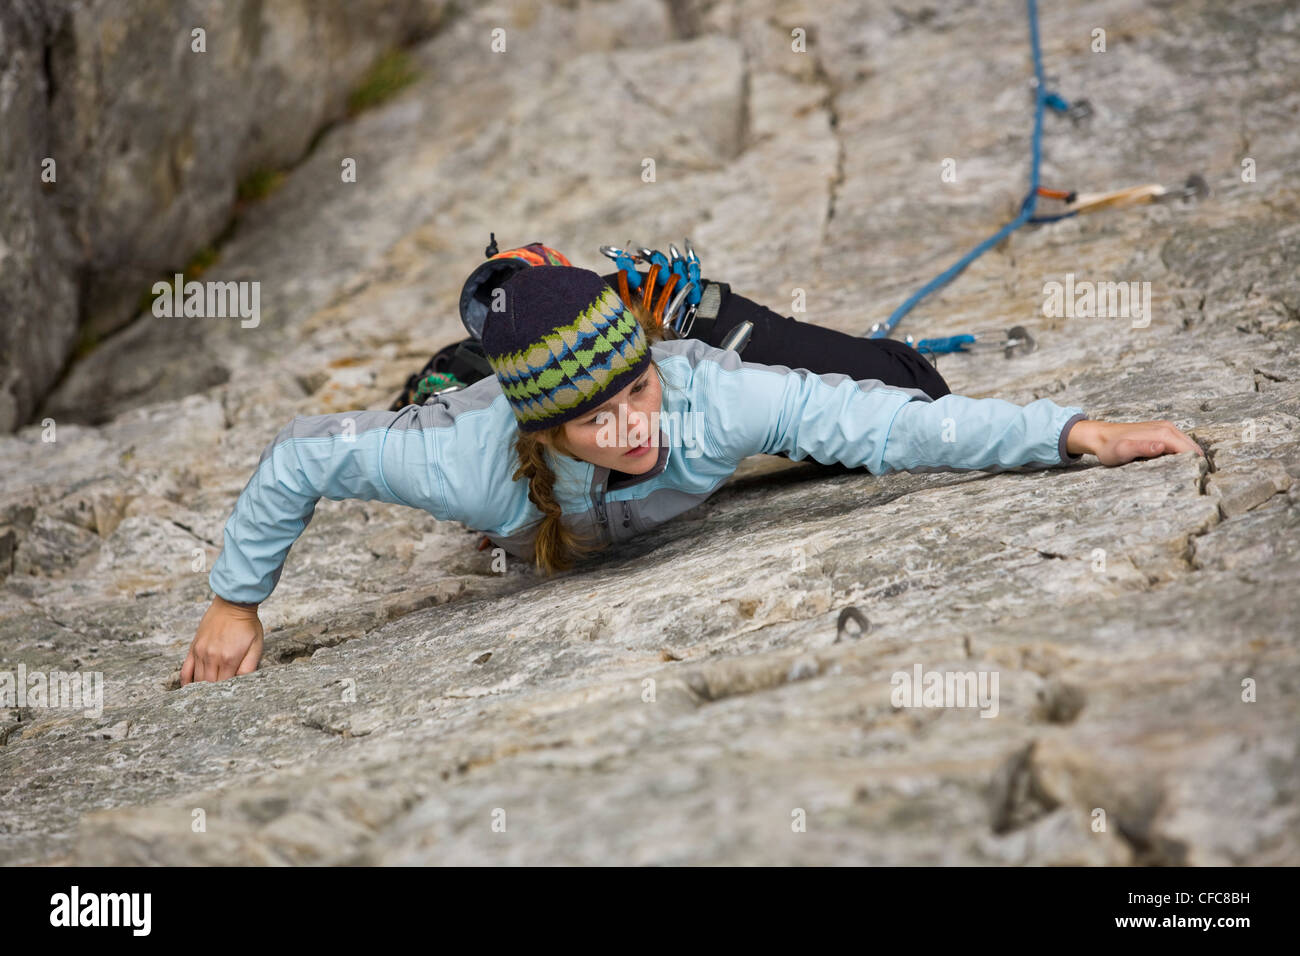 A young woman rockclimbing in Kamouraska, QC Stock Photo